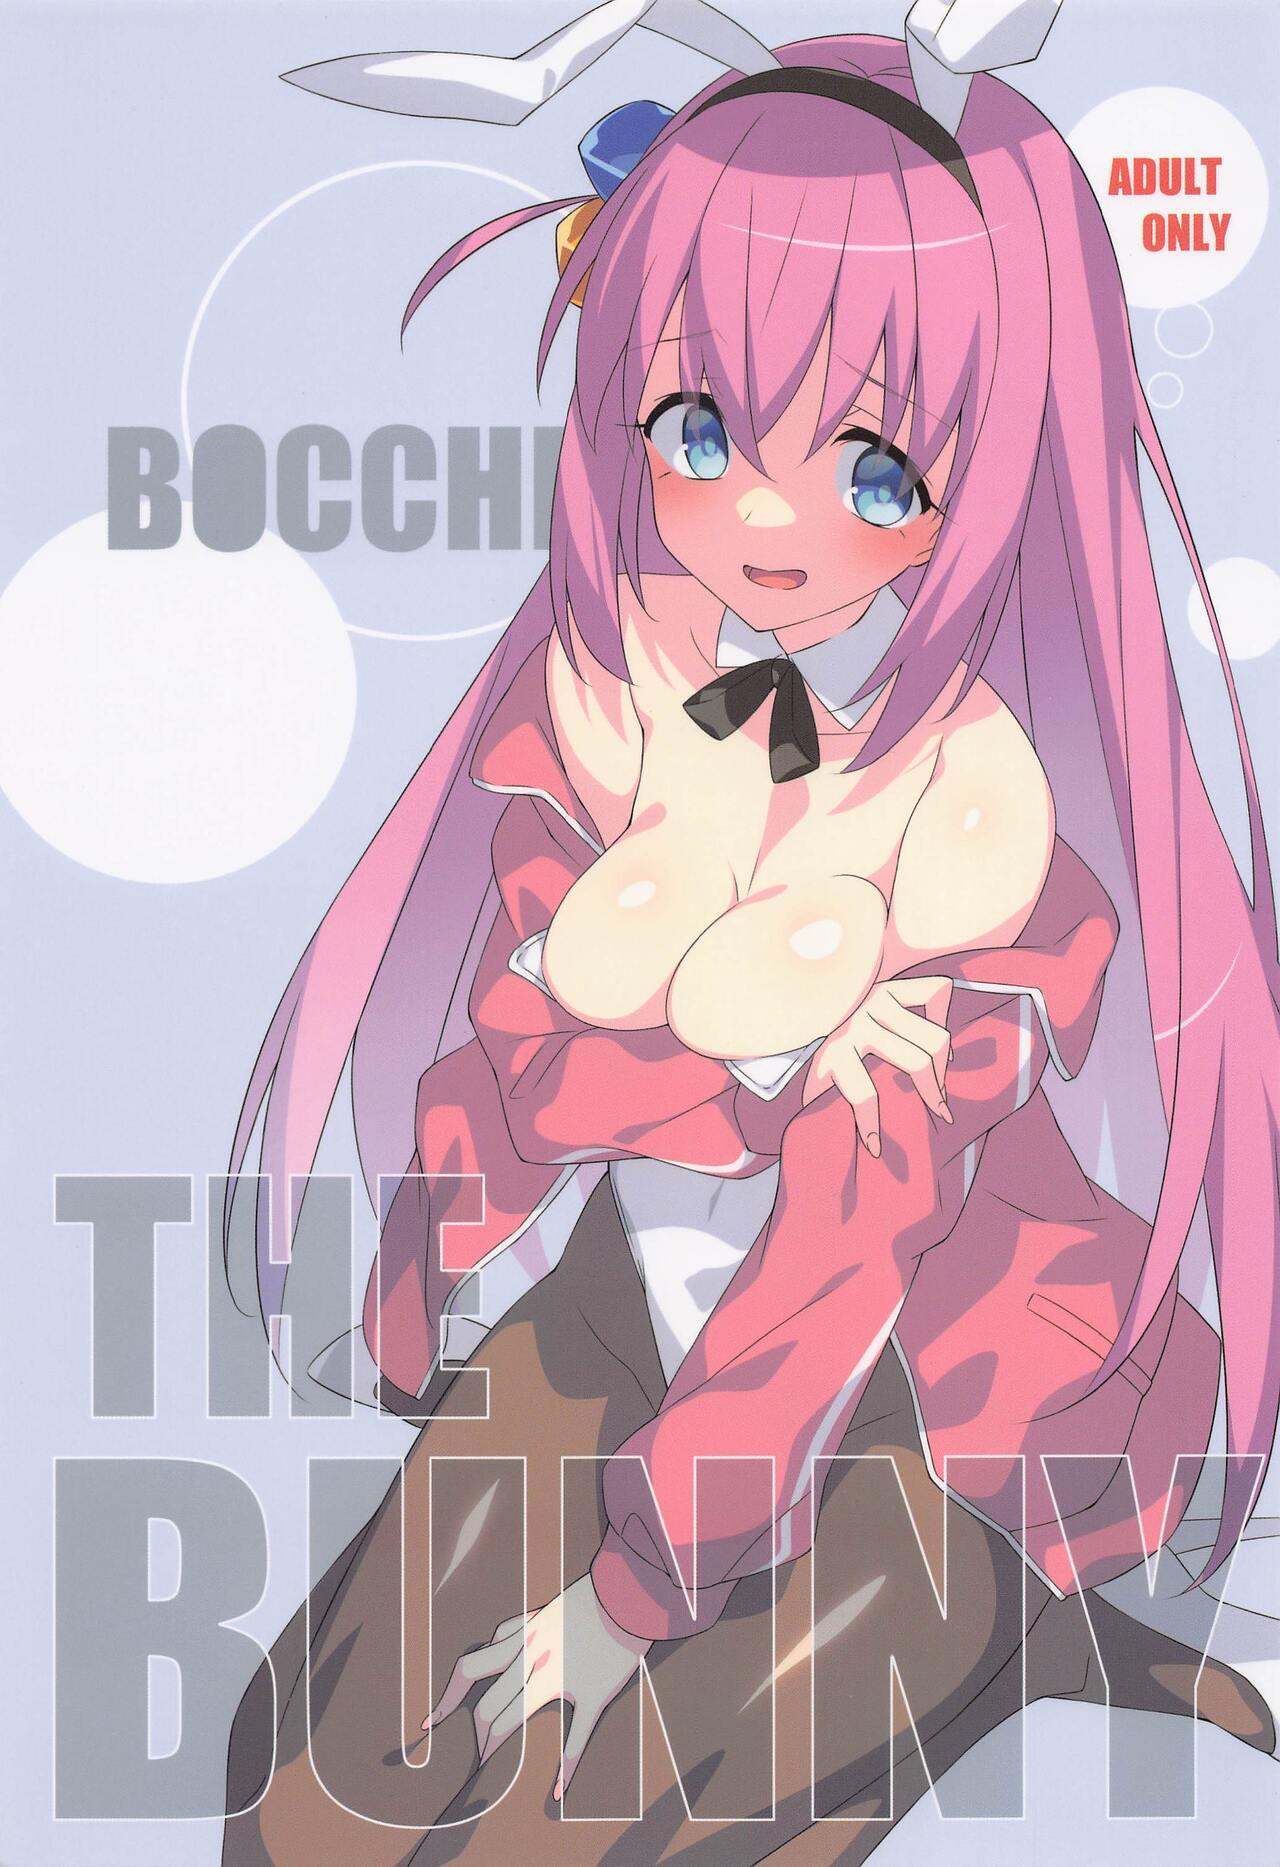 BOCCHI THE BUNNY 0